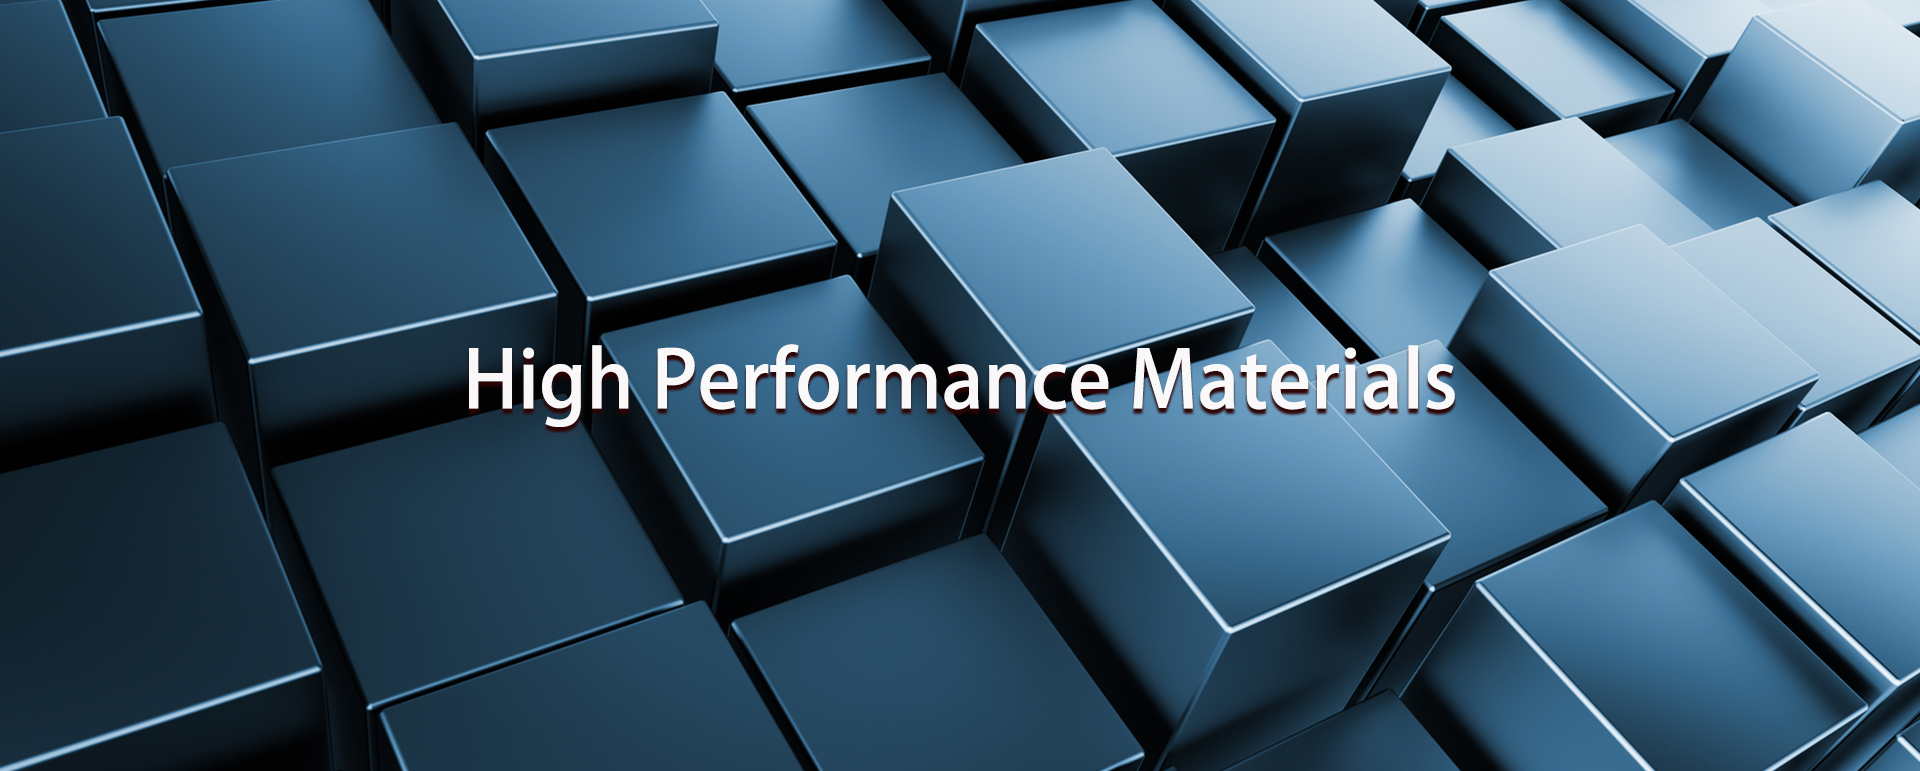 High Performance Materials